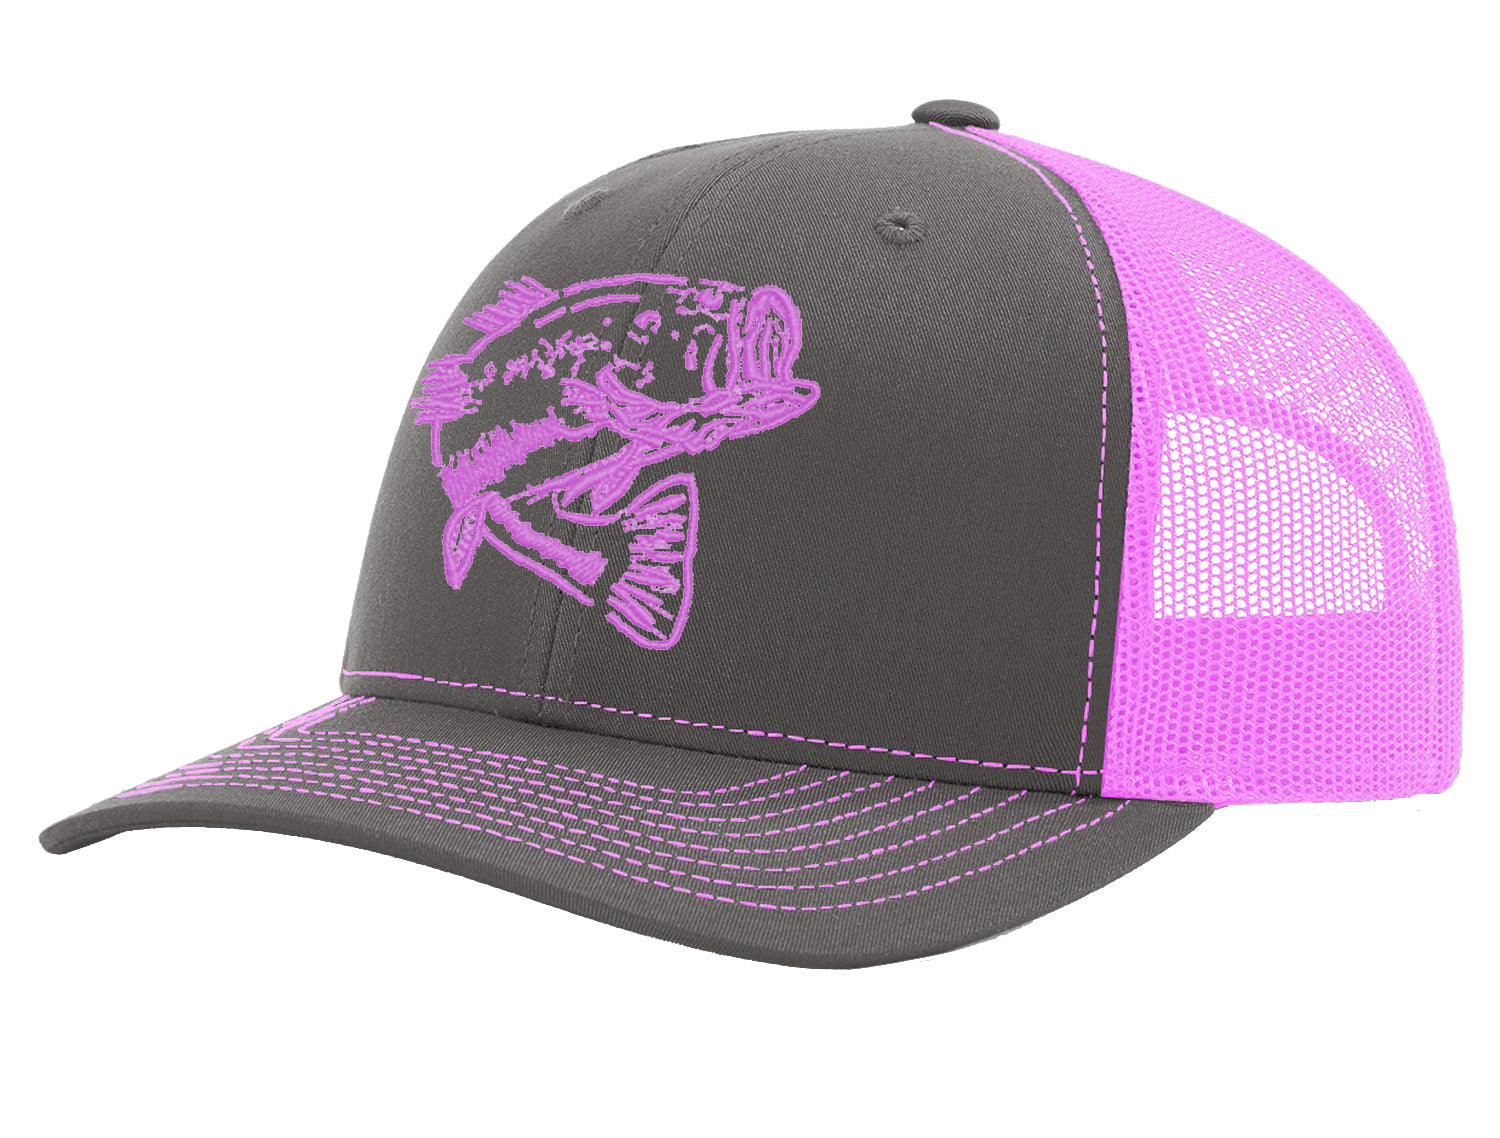 New Bass "Reel Hawg" Structured Trucker Hat - Charcoal/Pink Mesh - Pink Bass logo